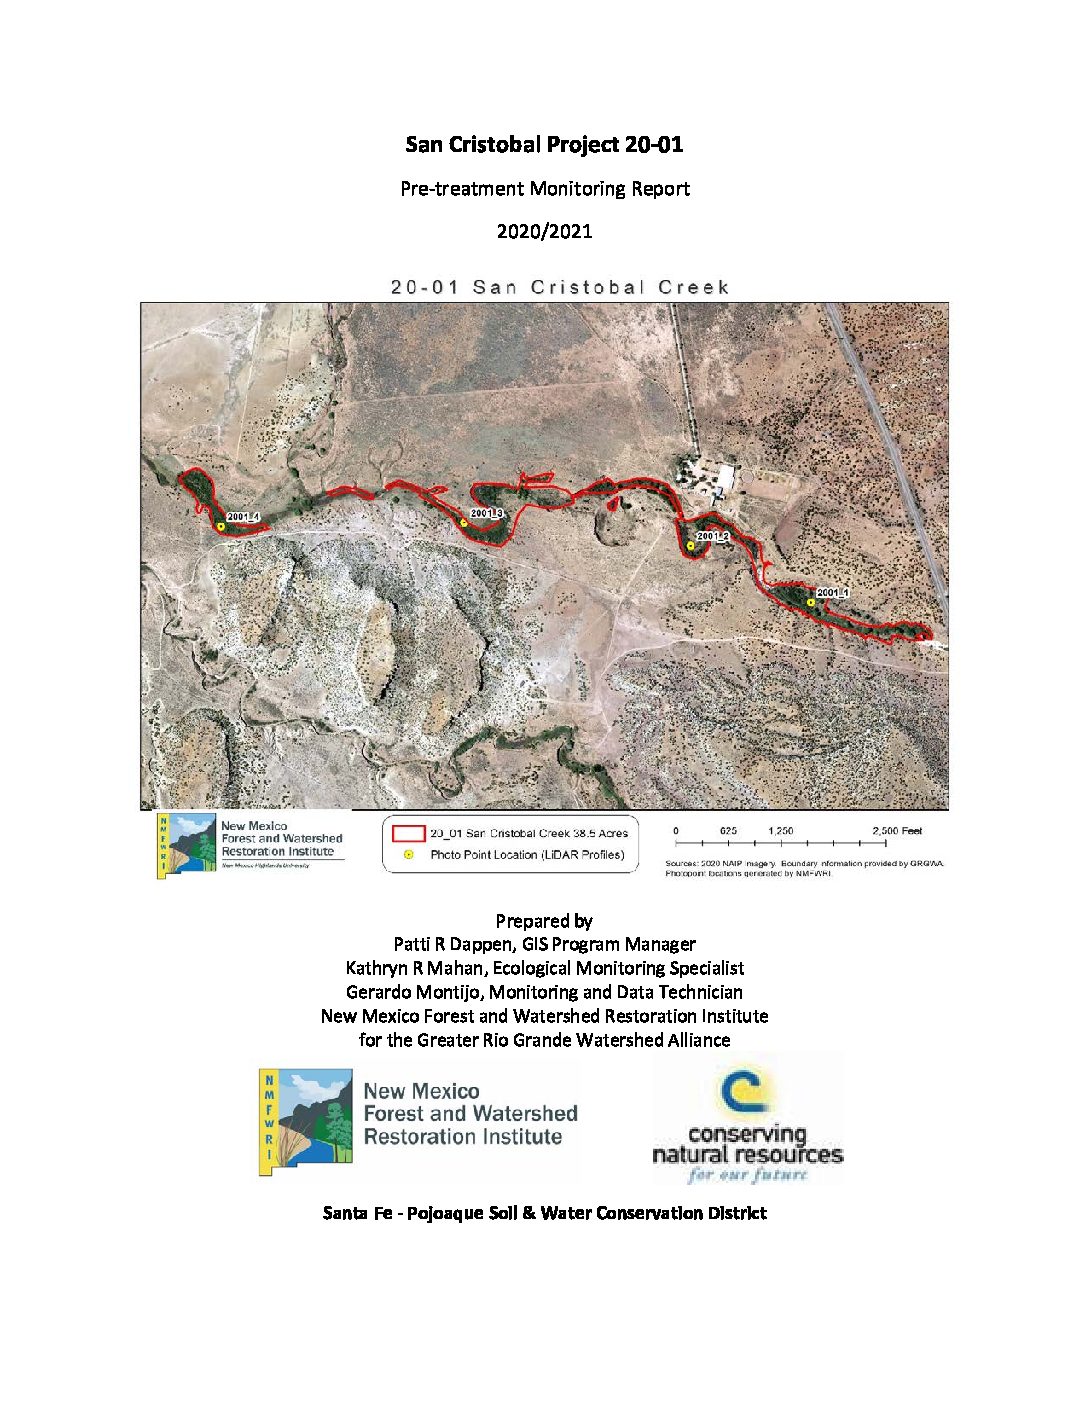 San Cristobal Project 20-01 Pre-treatment Monitoring Report 2020-2021